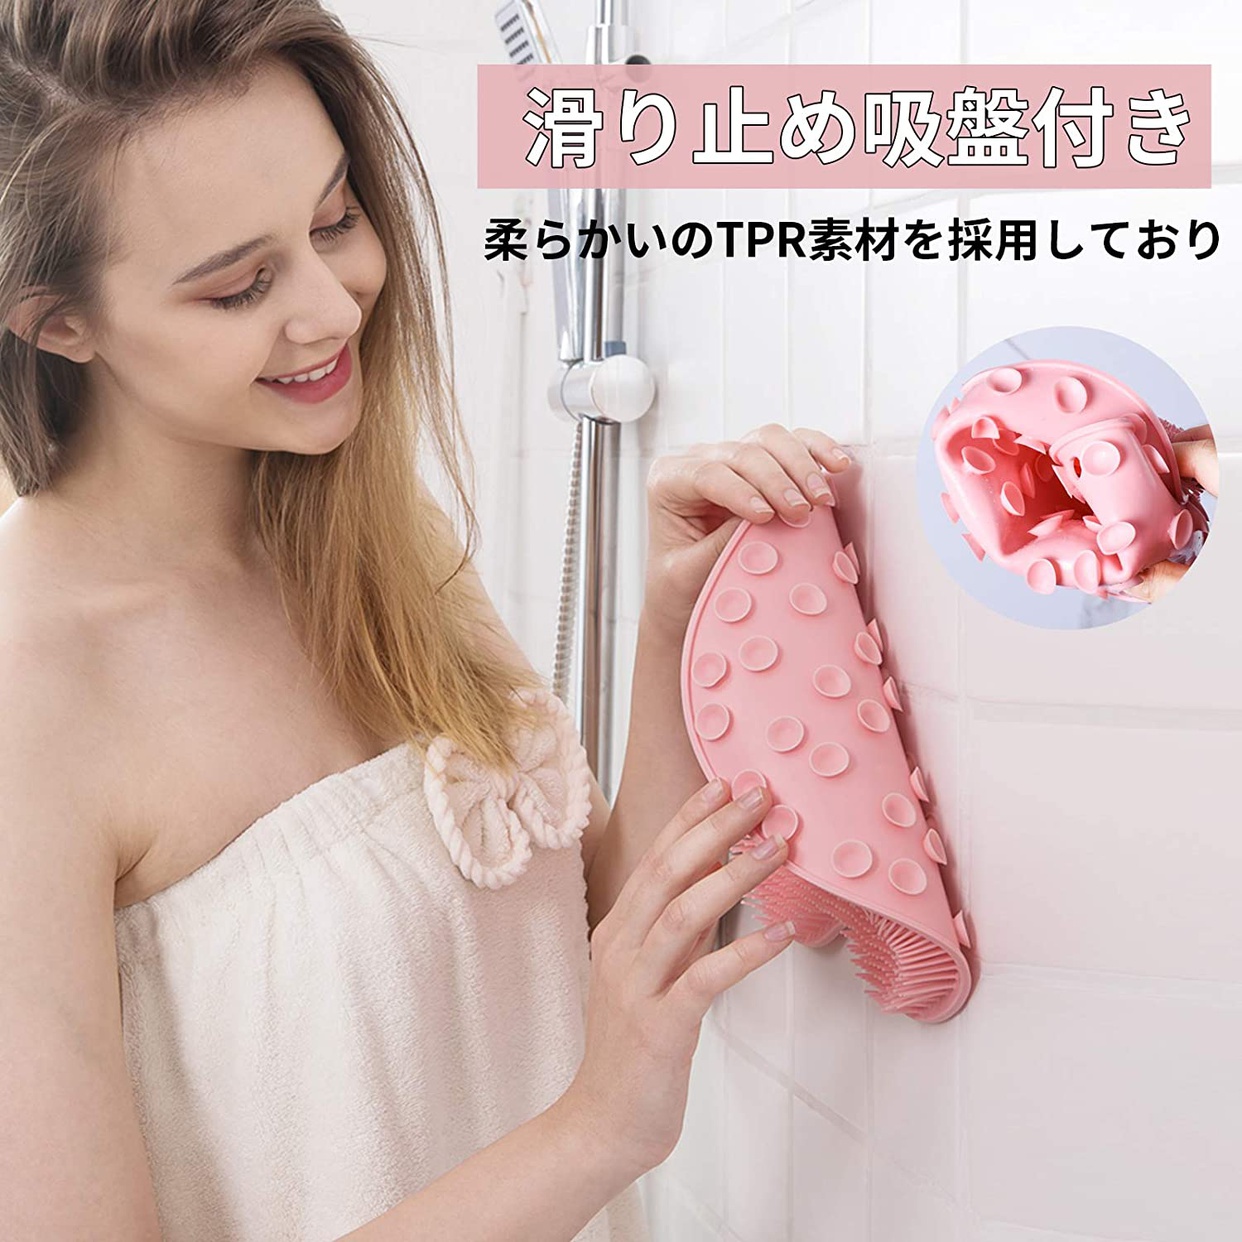 TOYU FREE(トーユーフリー) 足洗いマットの商品画像6 